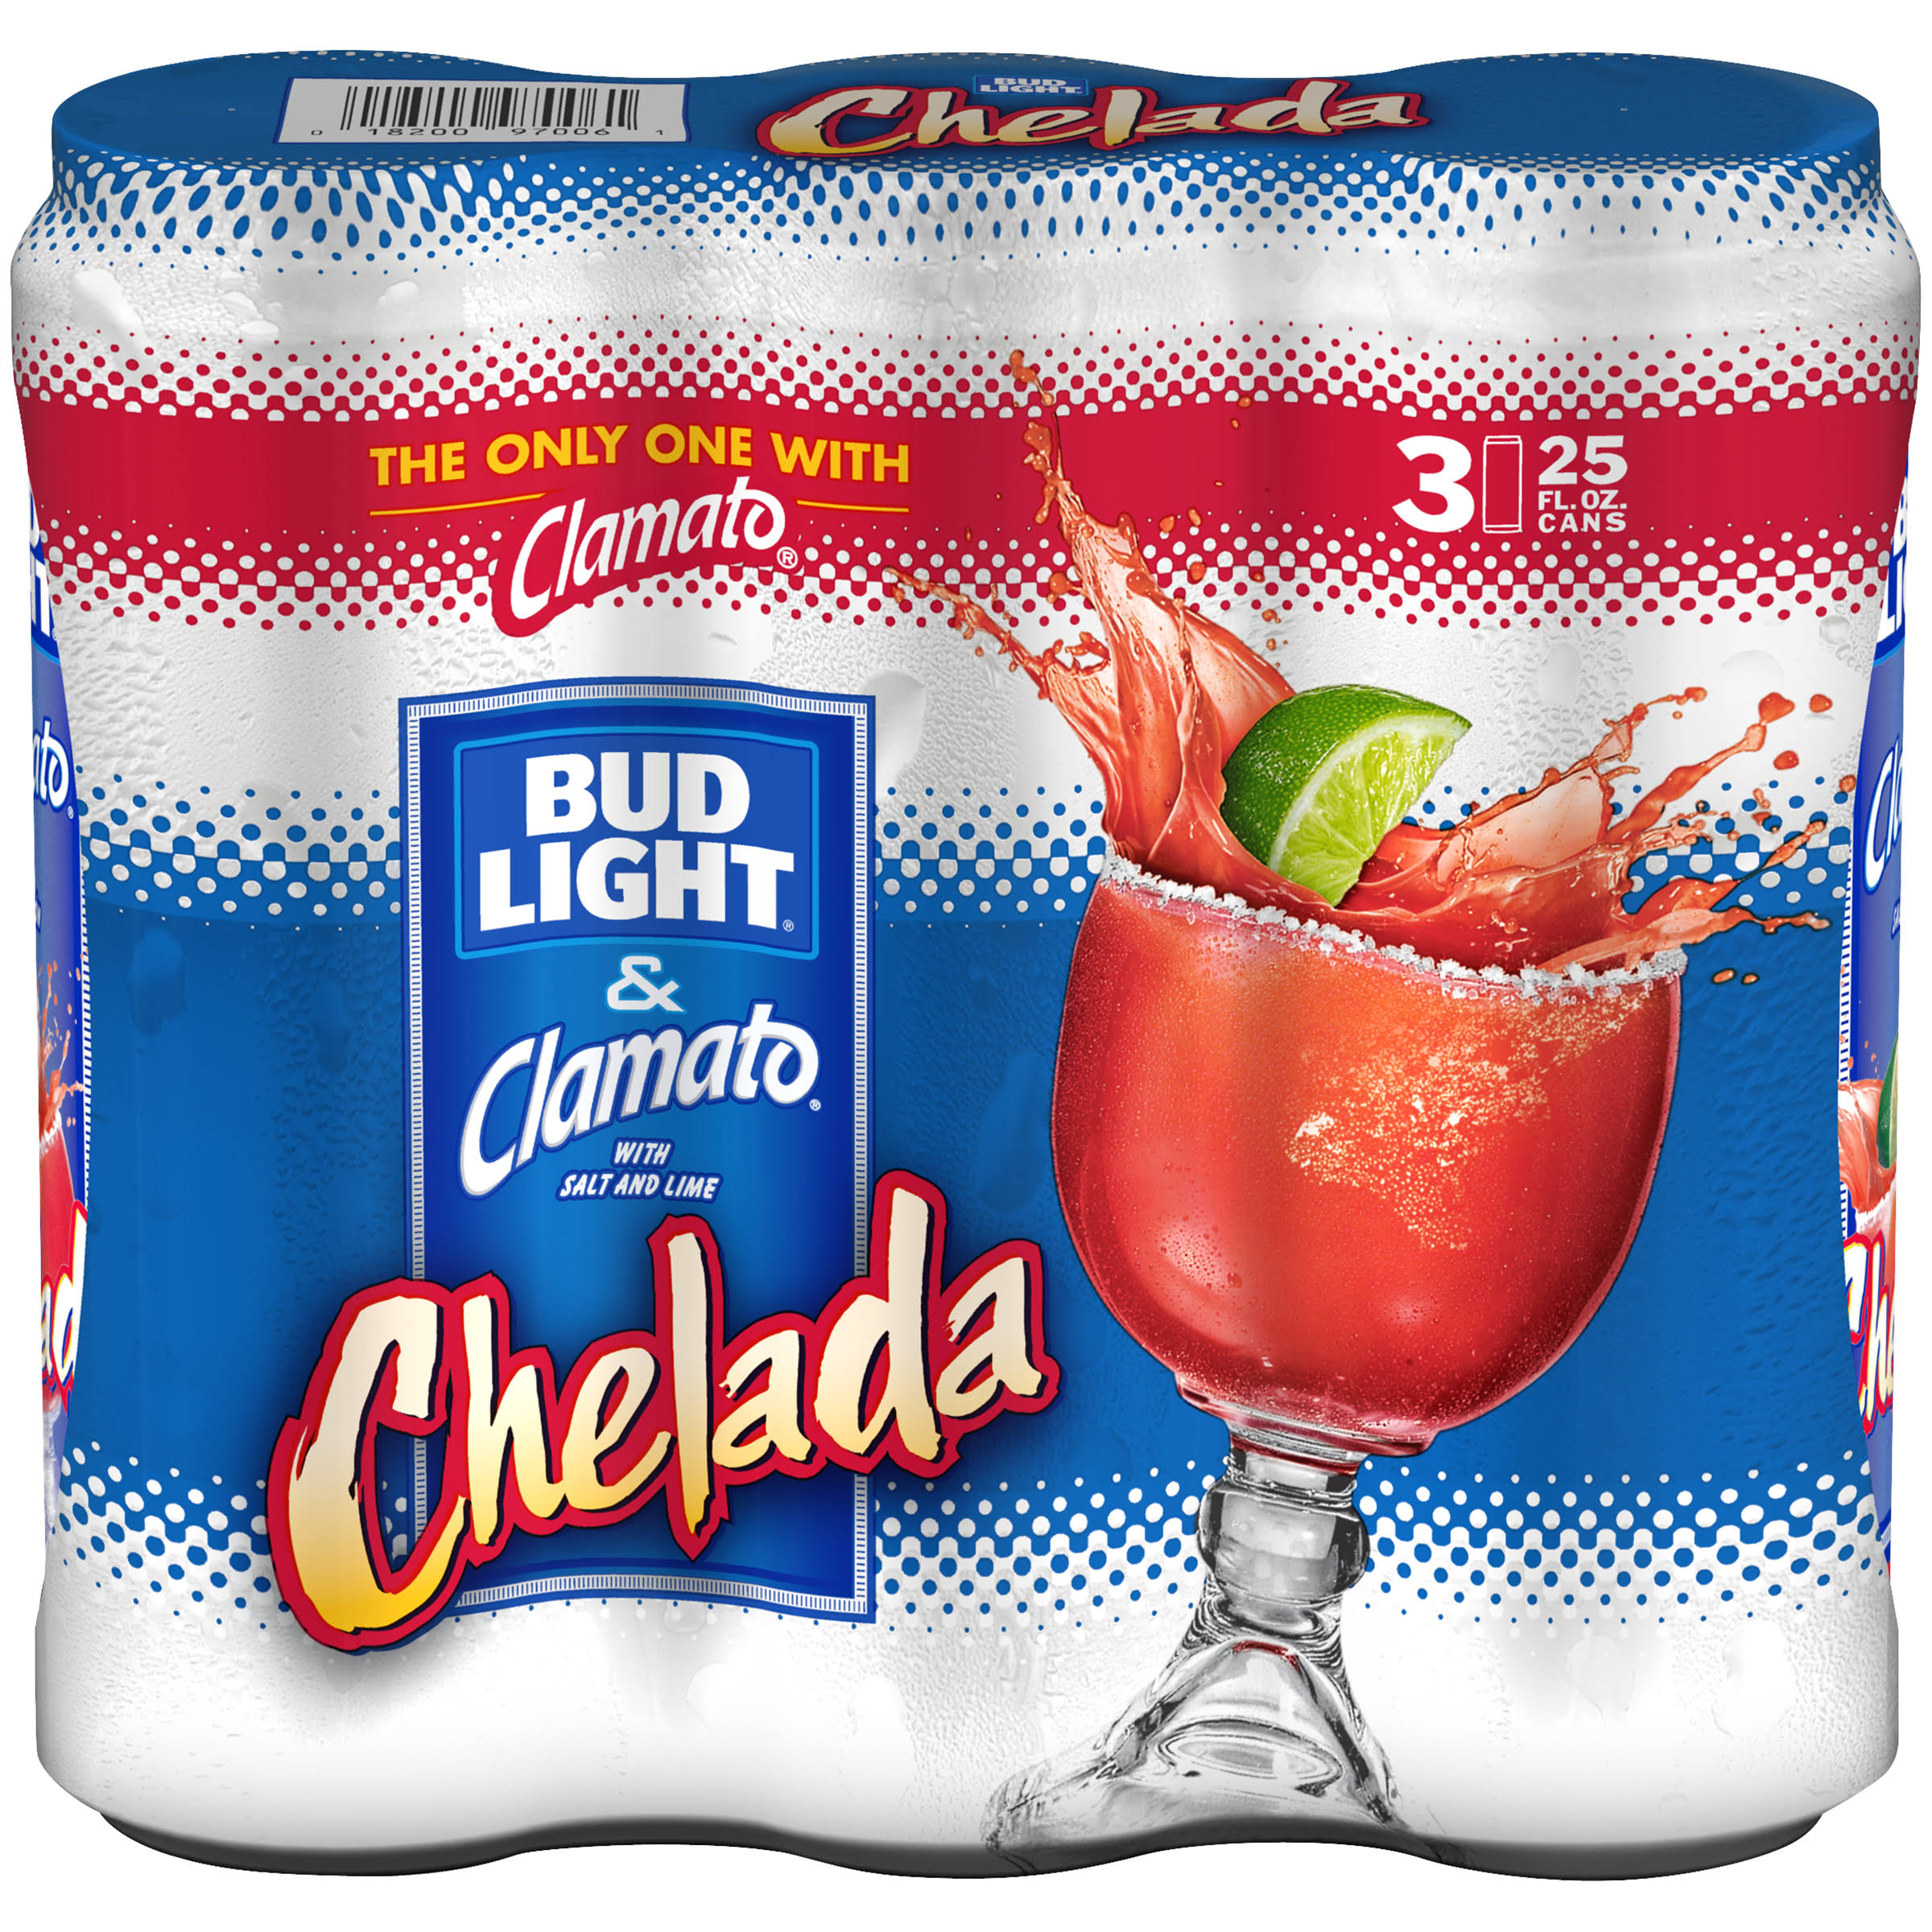 Bud Light Chelada Beer, Chelada, Original - 3 pack, 25 fl oz cans